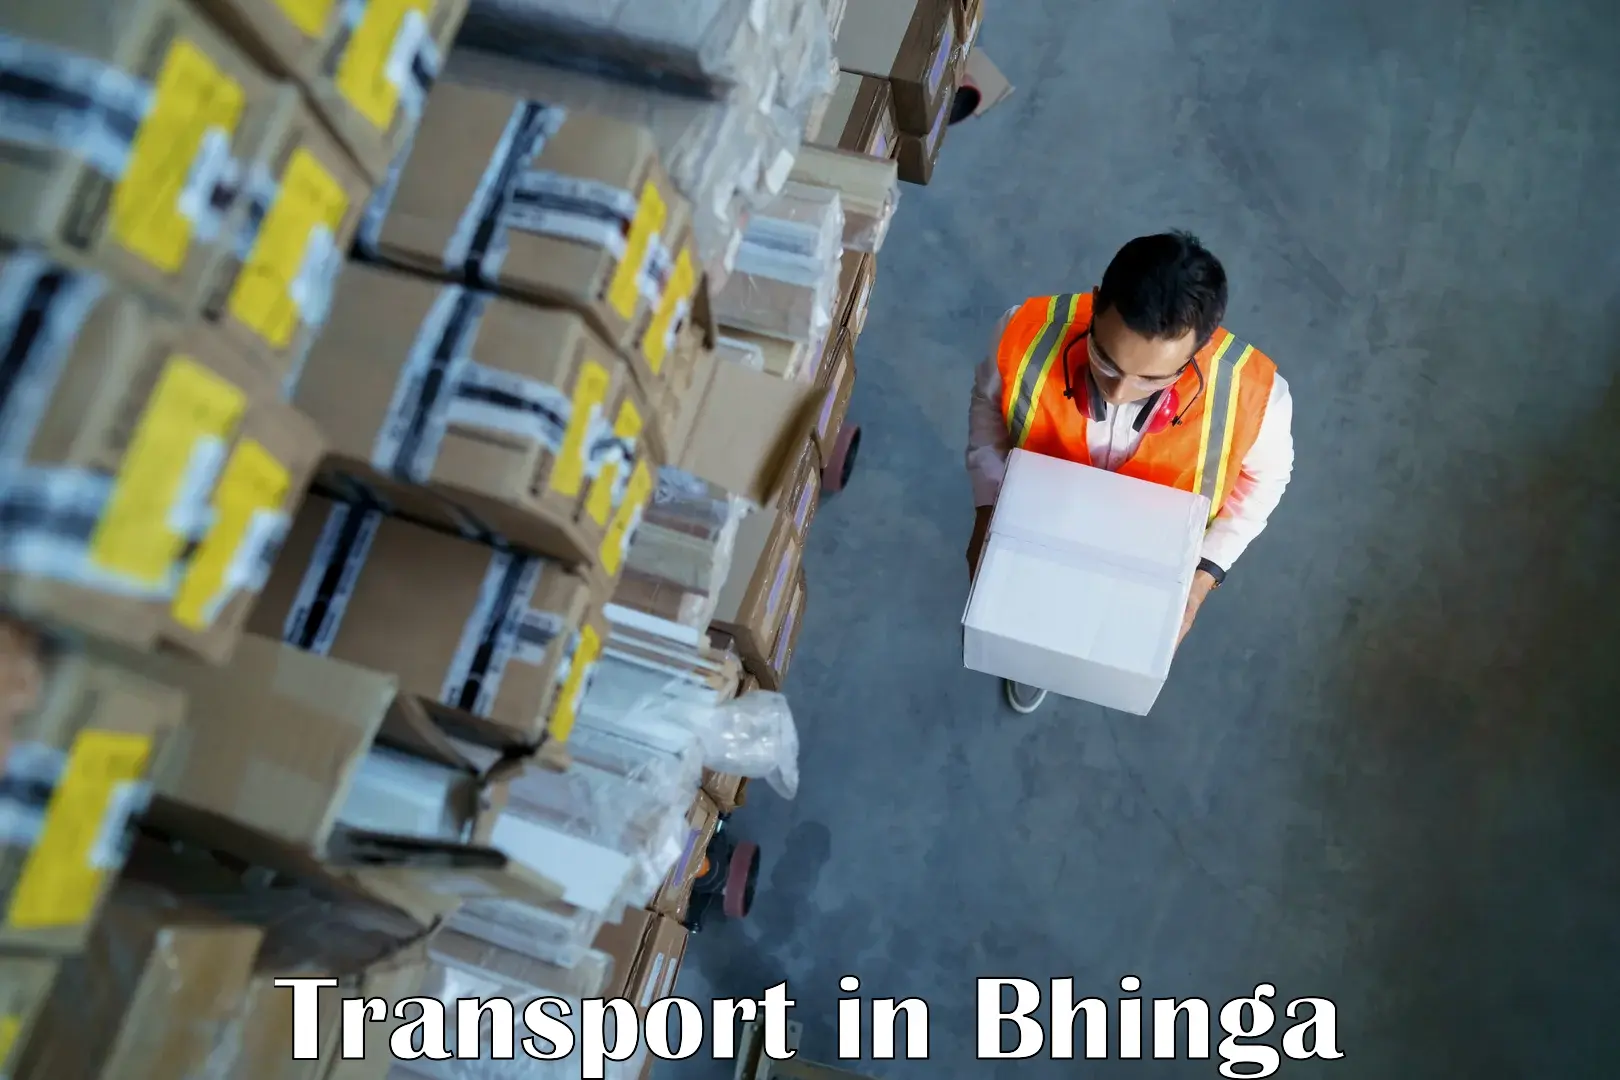 Transportation solution services in Bhinga